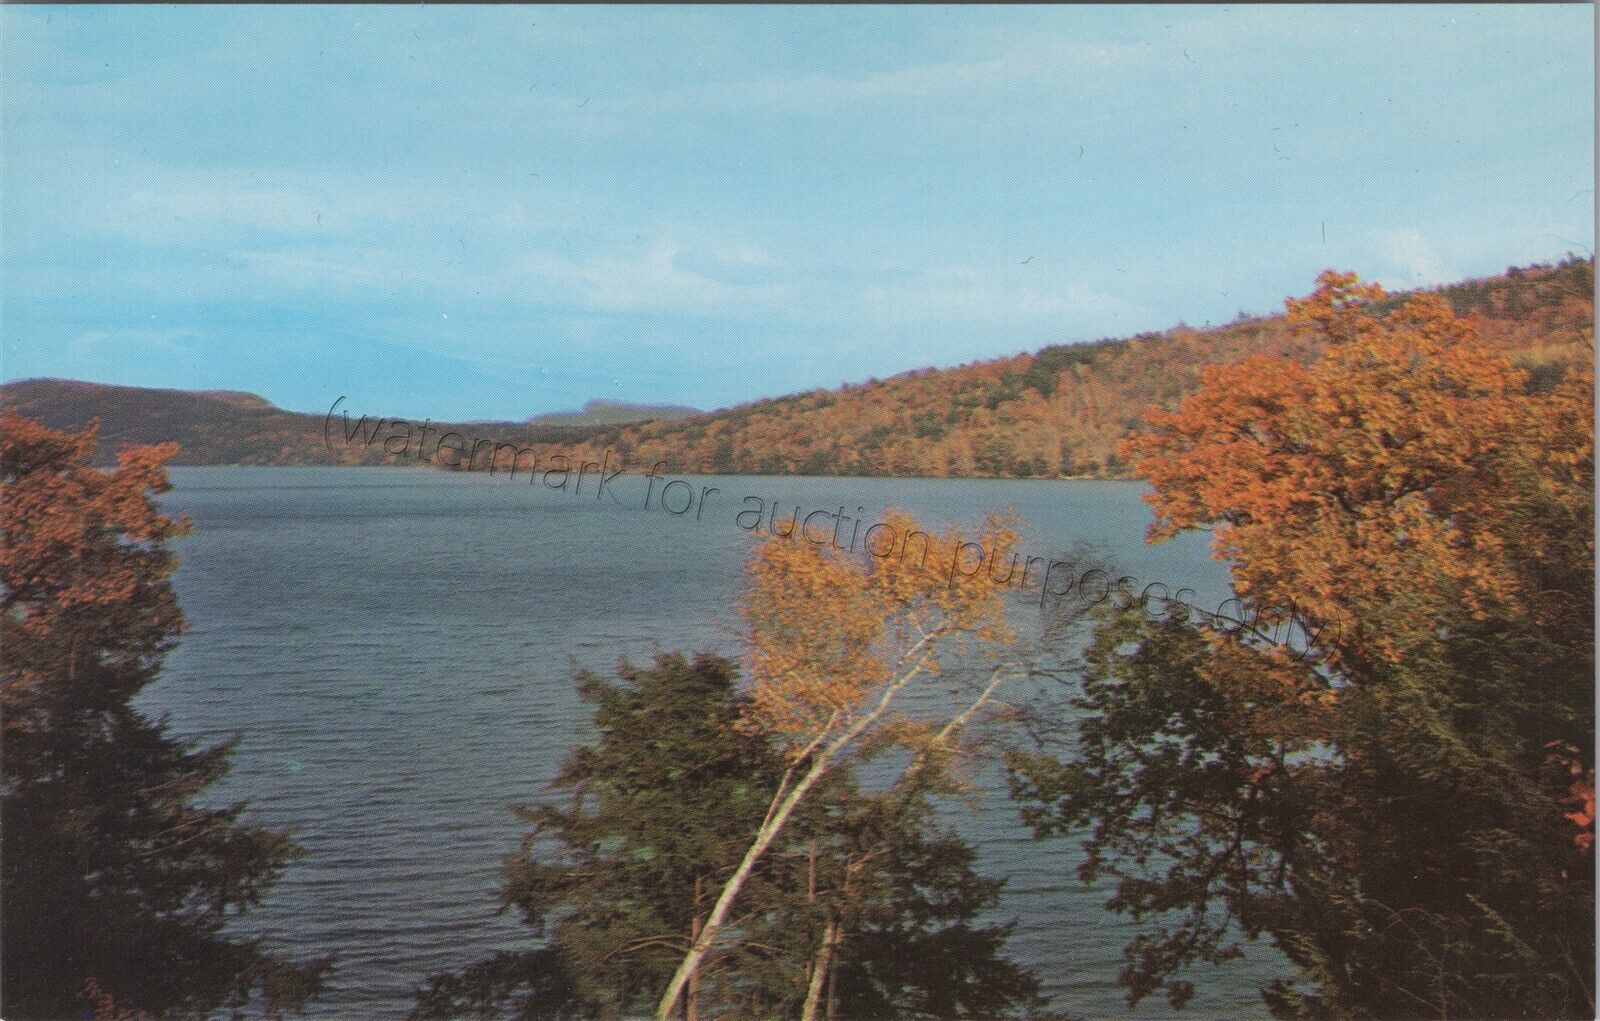 Fairlee, Vermont - Lake Morey VT in autumn / fall vintage chrome unused postcard